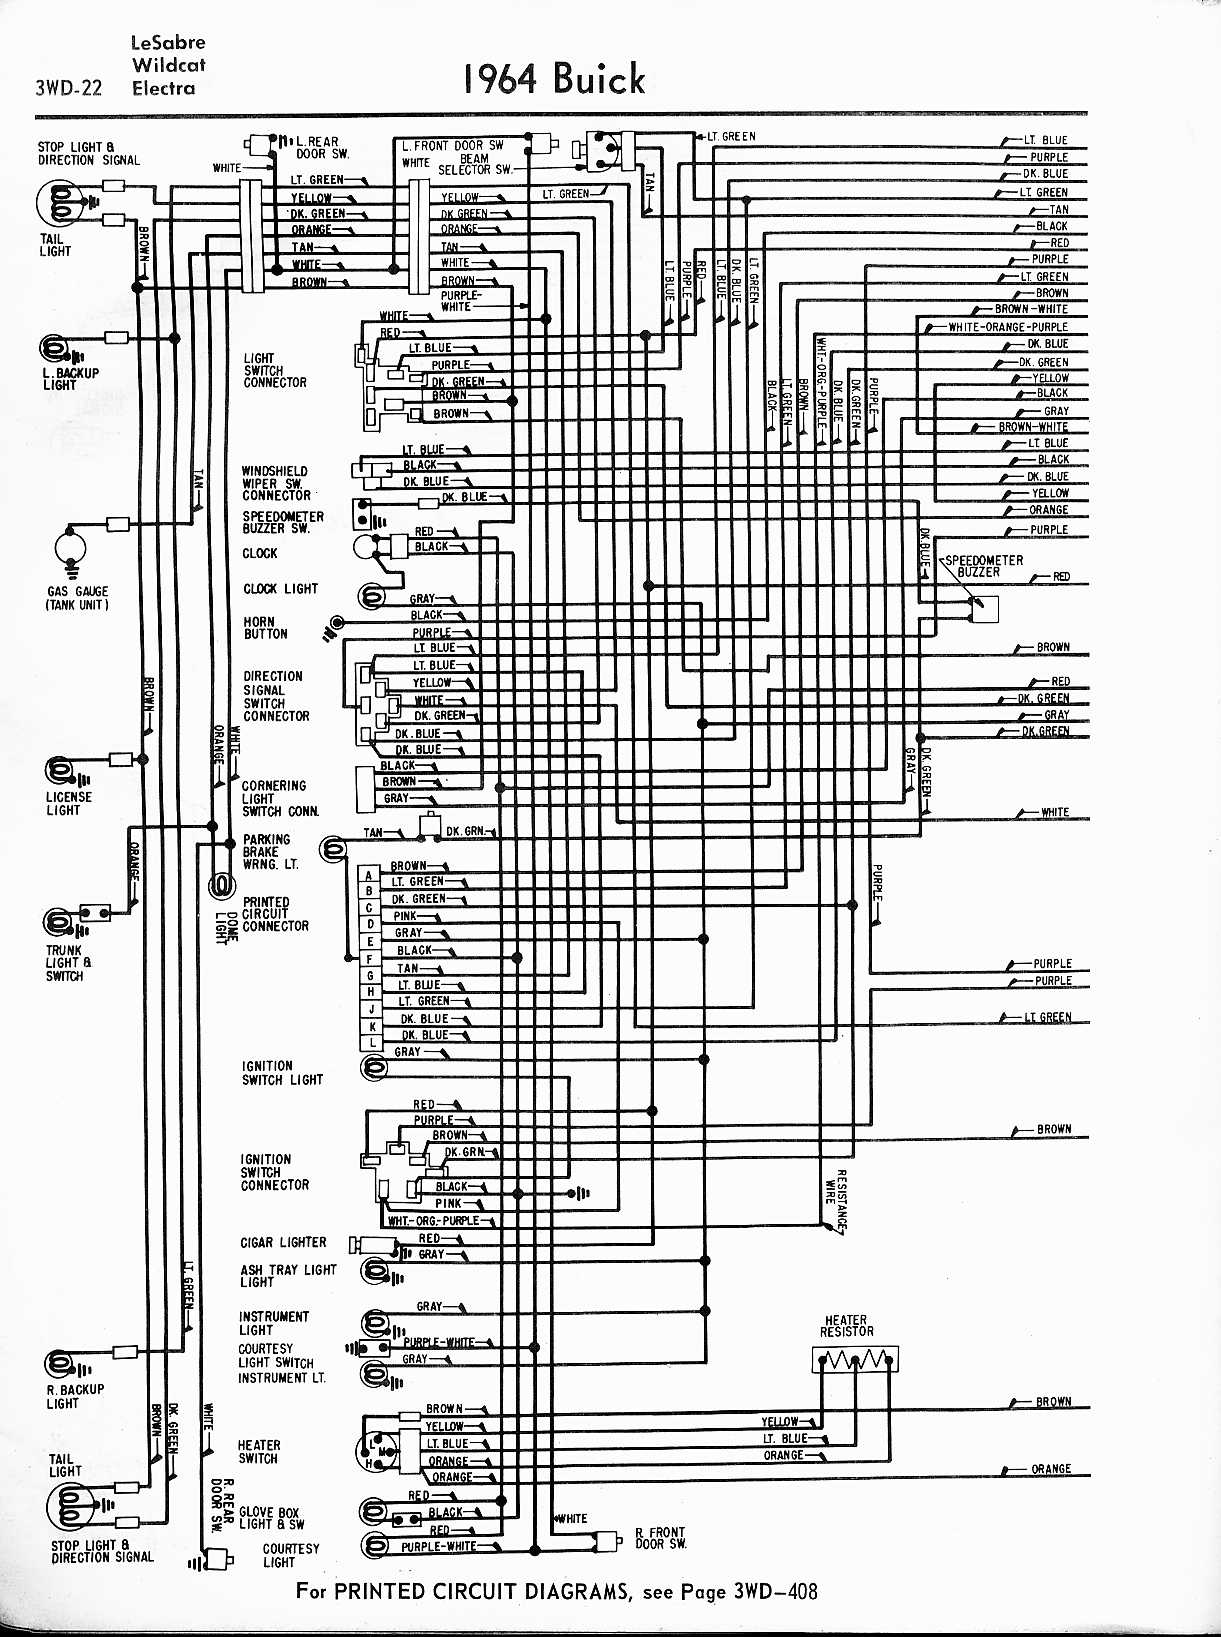 1991 Buick Century Engine Diagram Complete Wiring Diagram